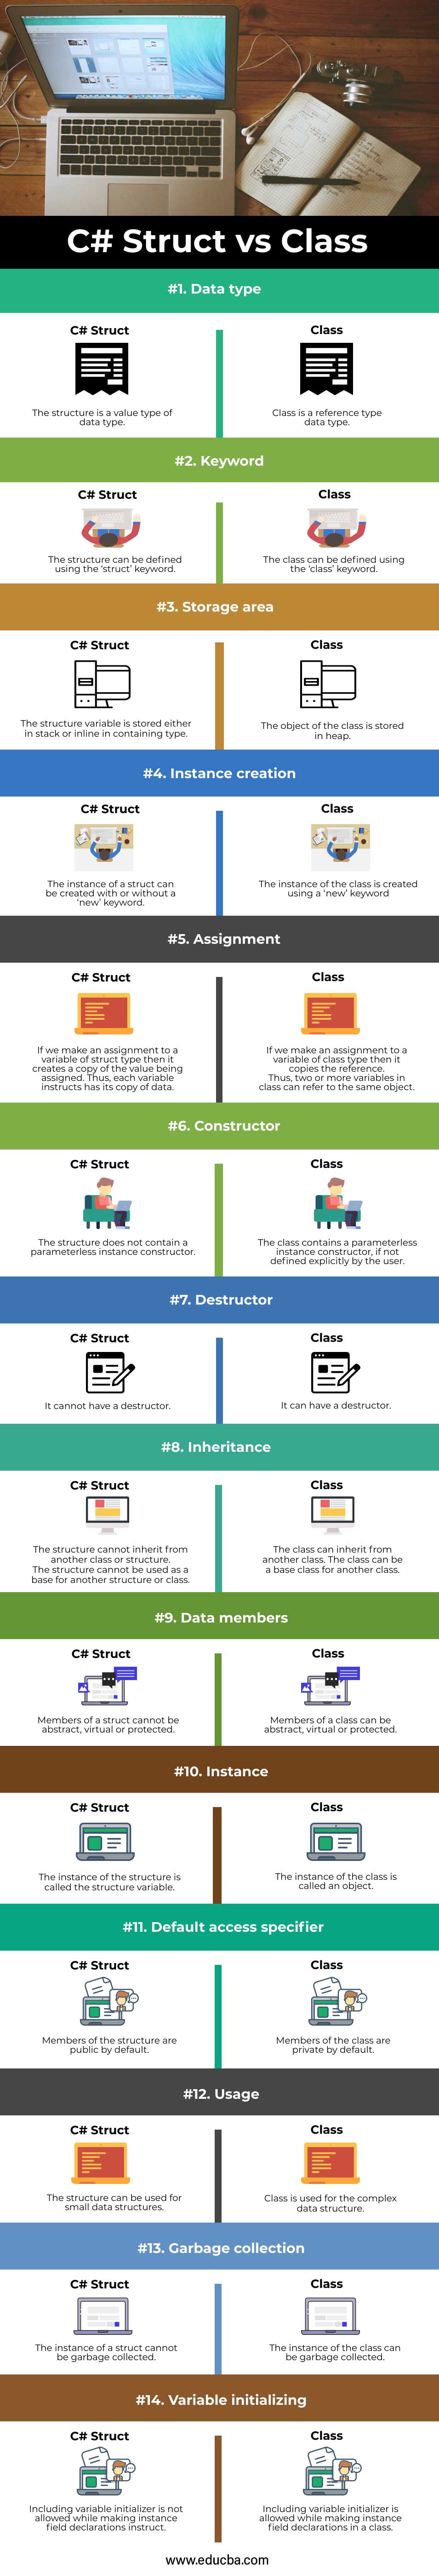 C#-Struct-vs-Class-info